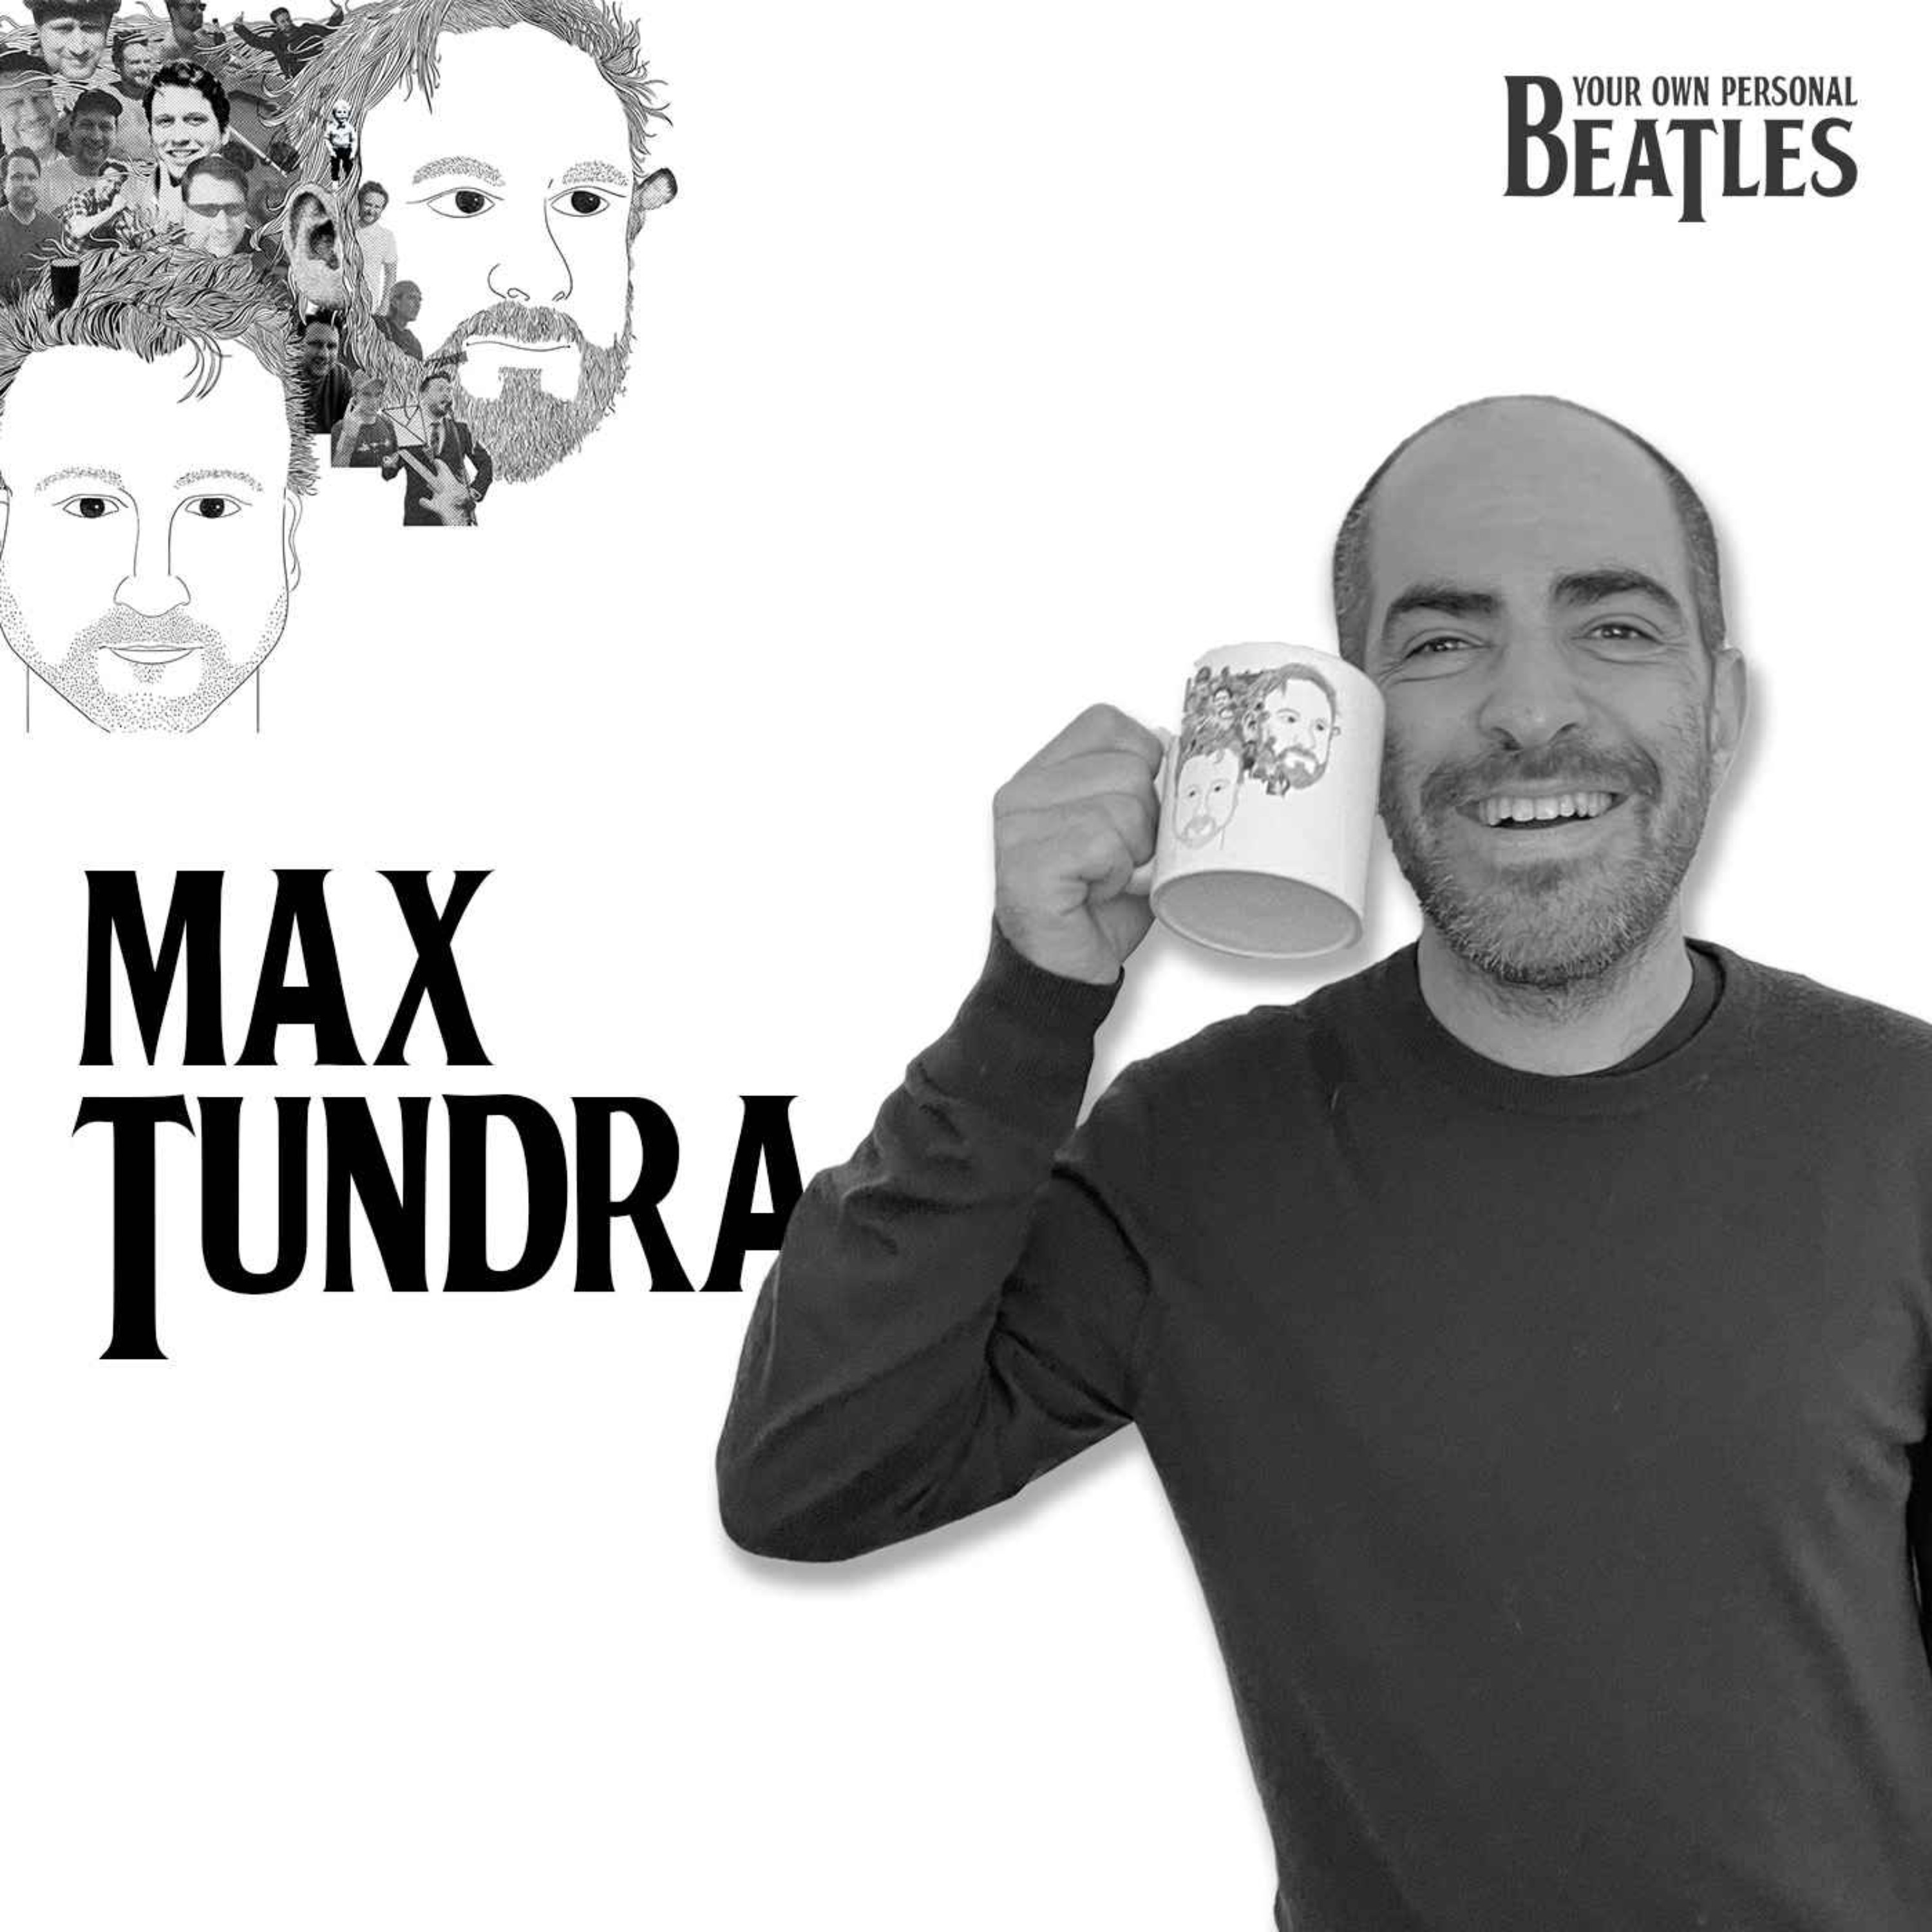 Max Tundra’s Personal Beatles